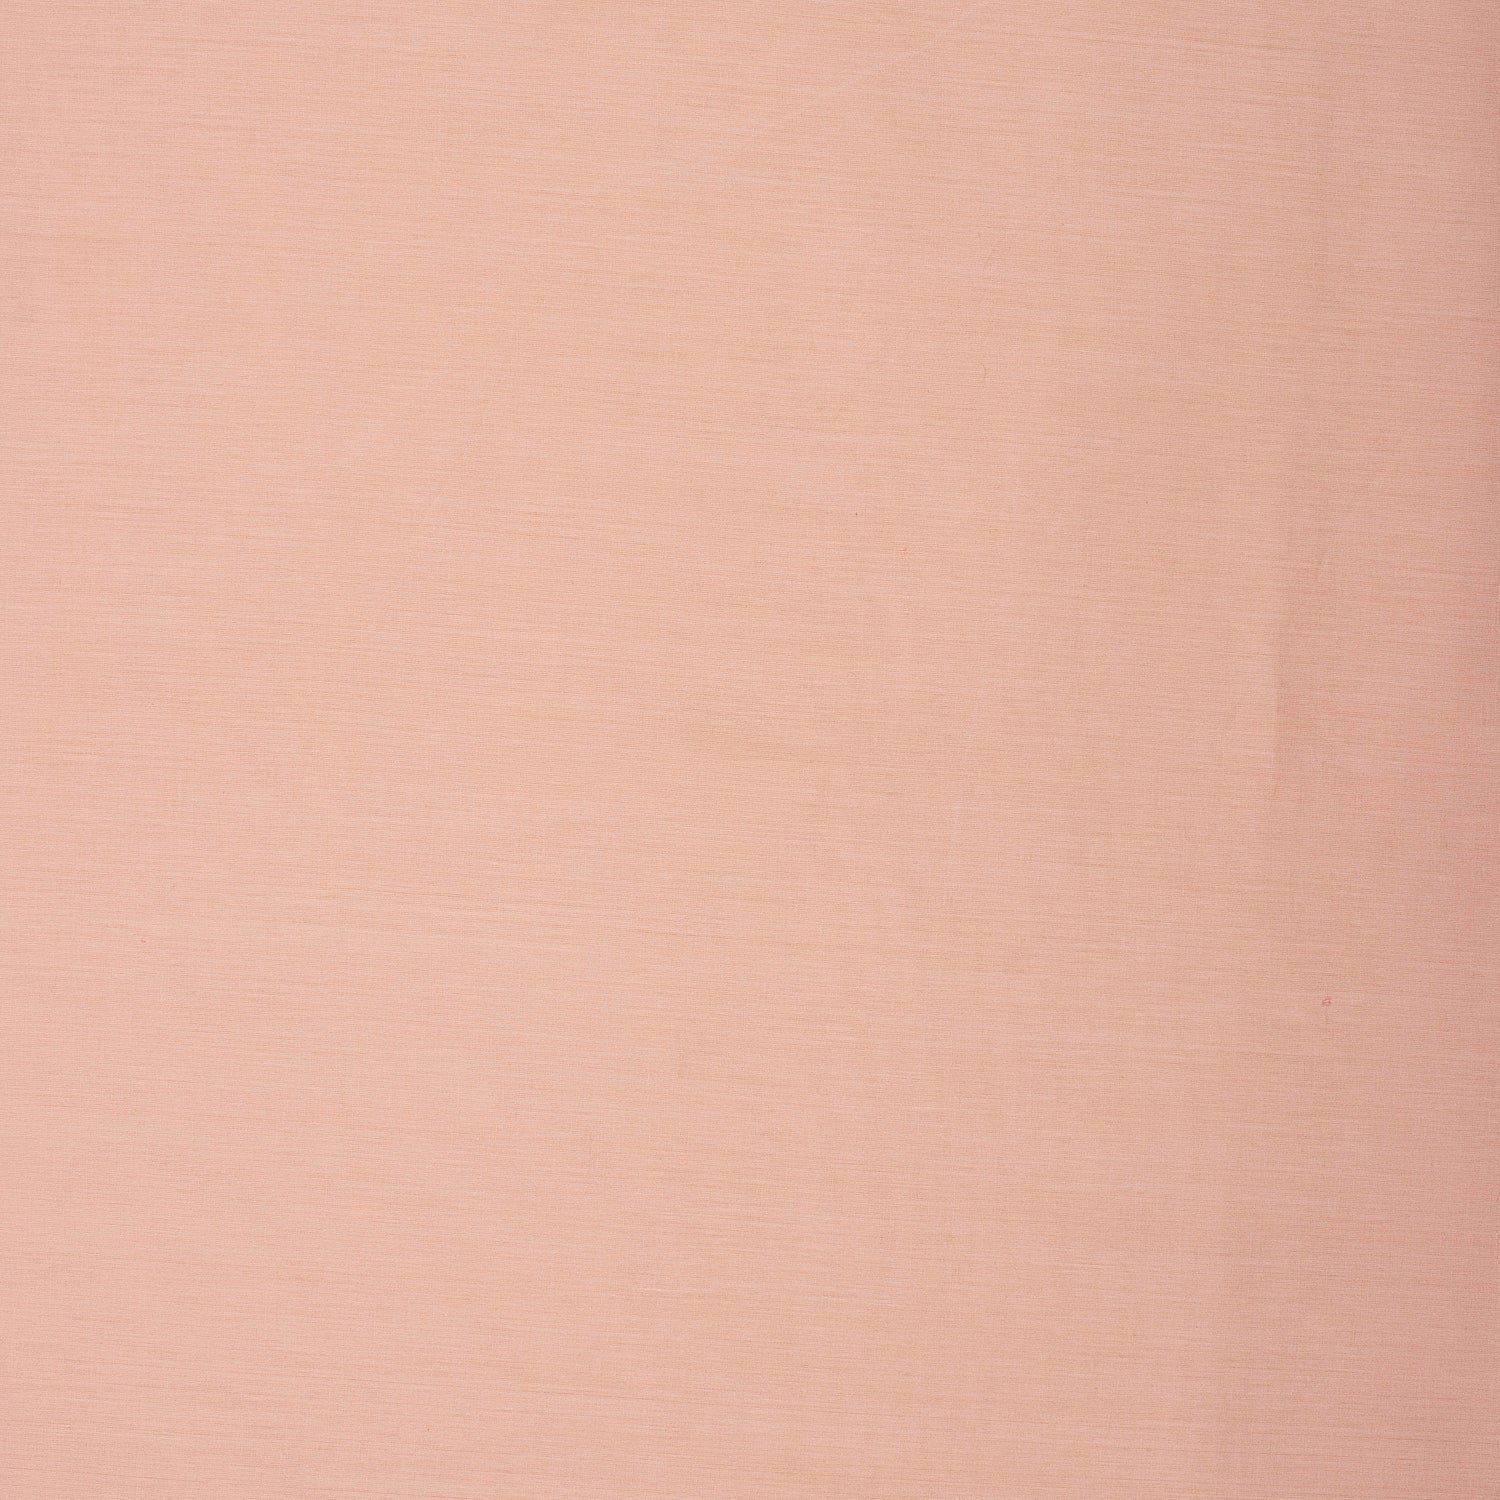 Solid Light Pink Premium Cotton Shirt Fabric